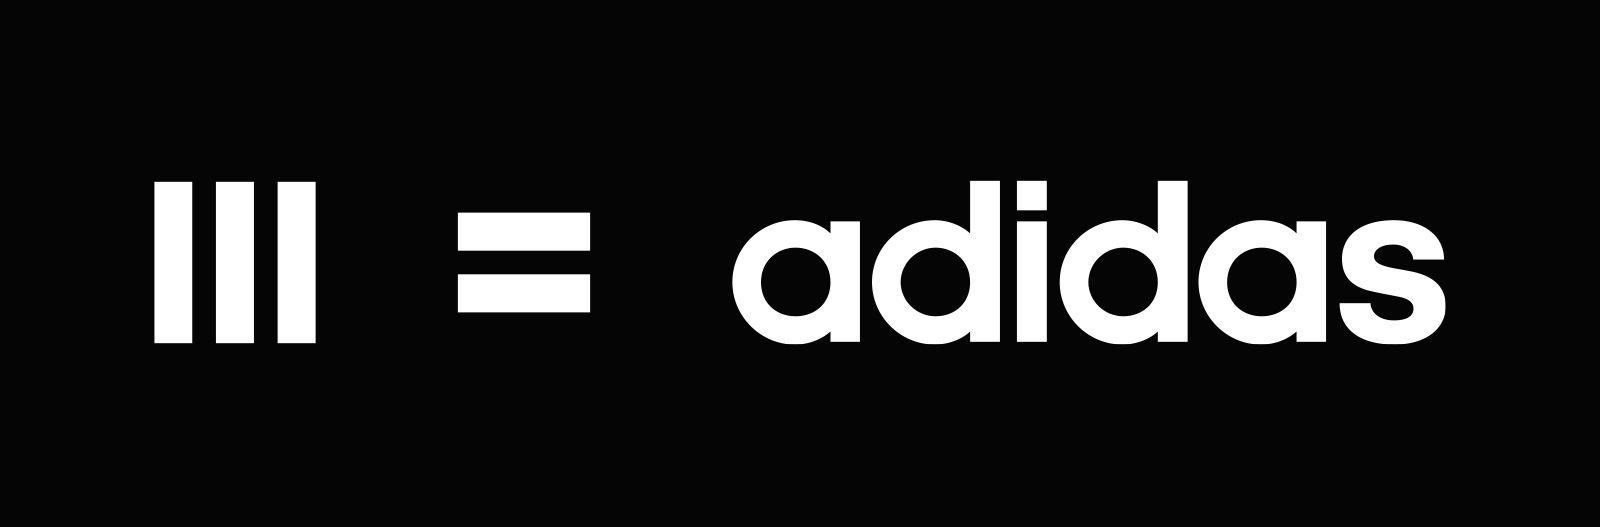 Adidas Brand Logo - Adidas Brand Design Study